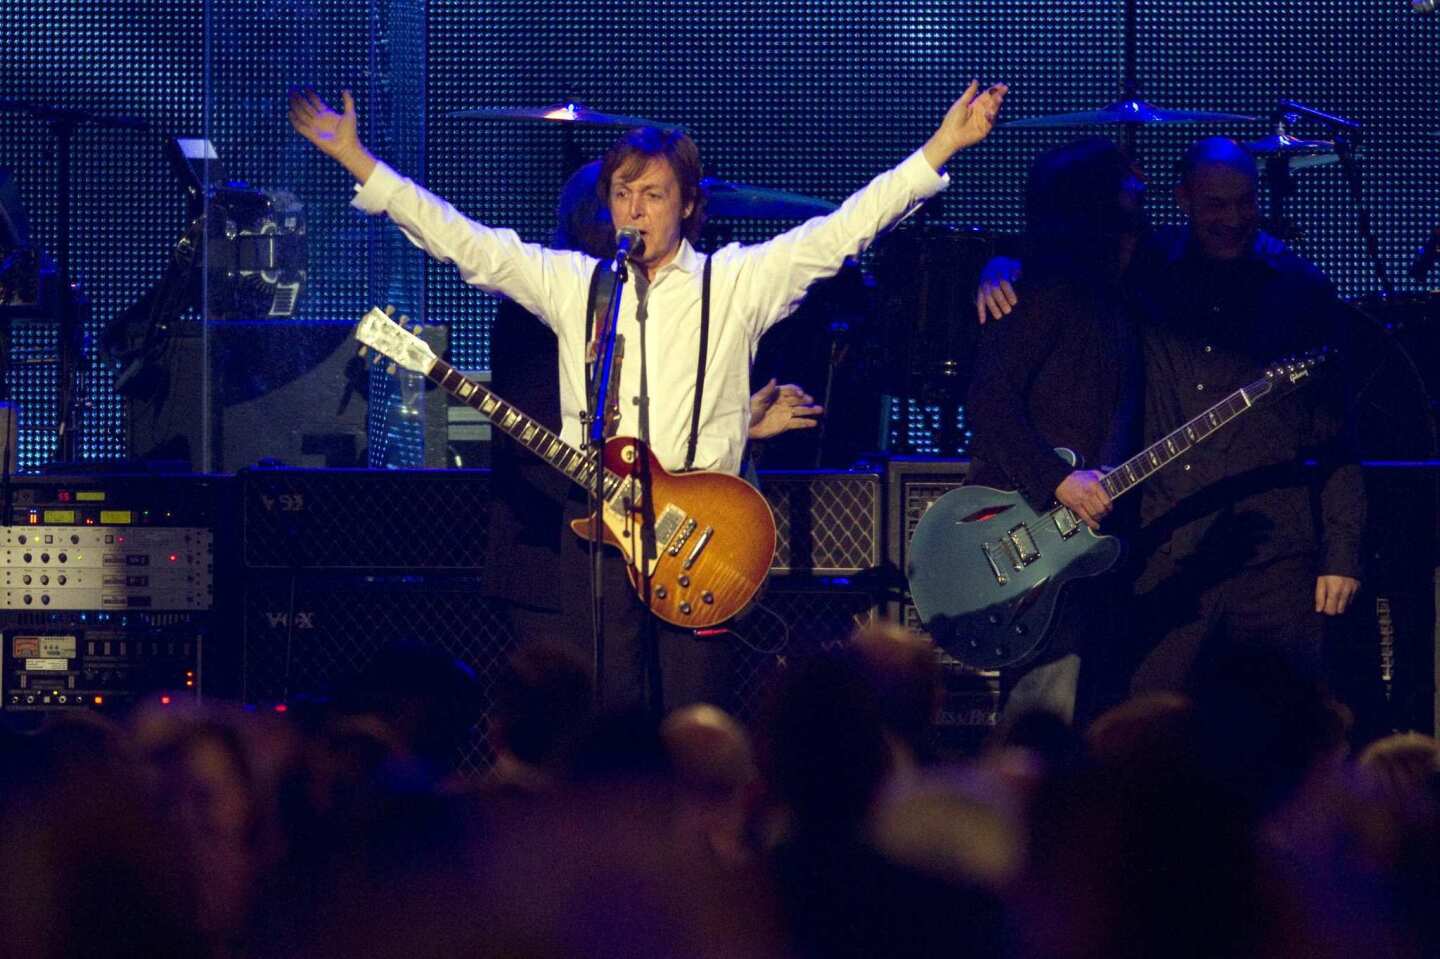 Paul McCartney says goodbye to the crowd.